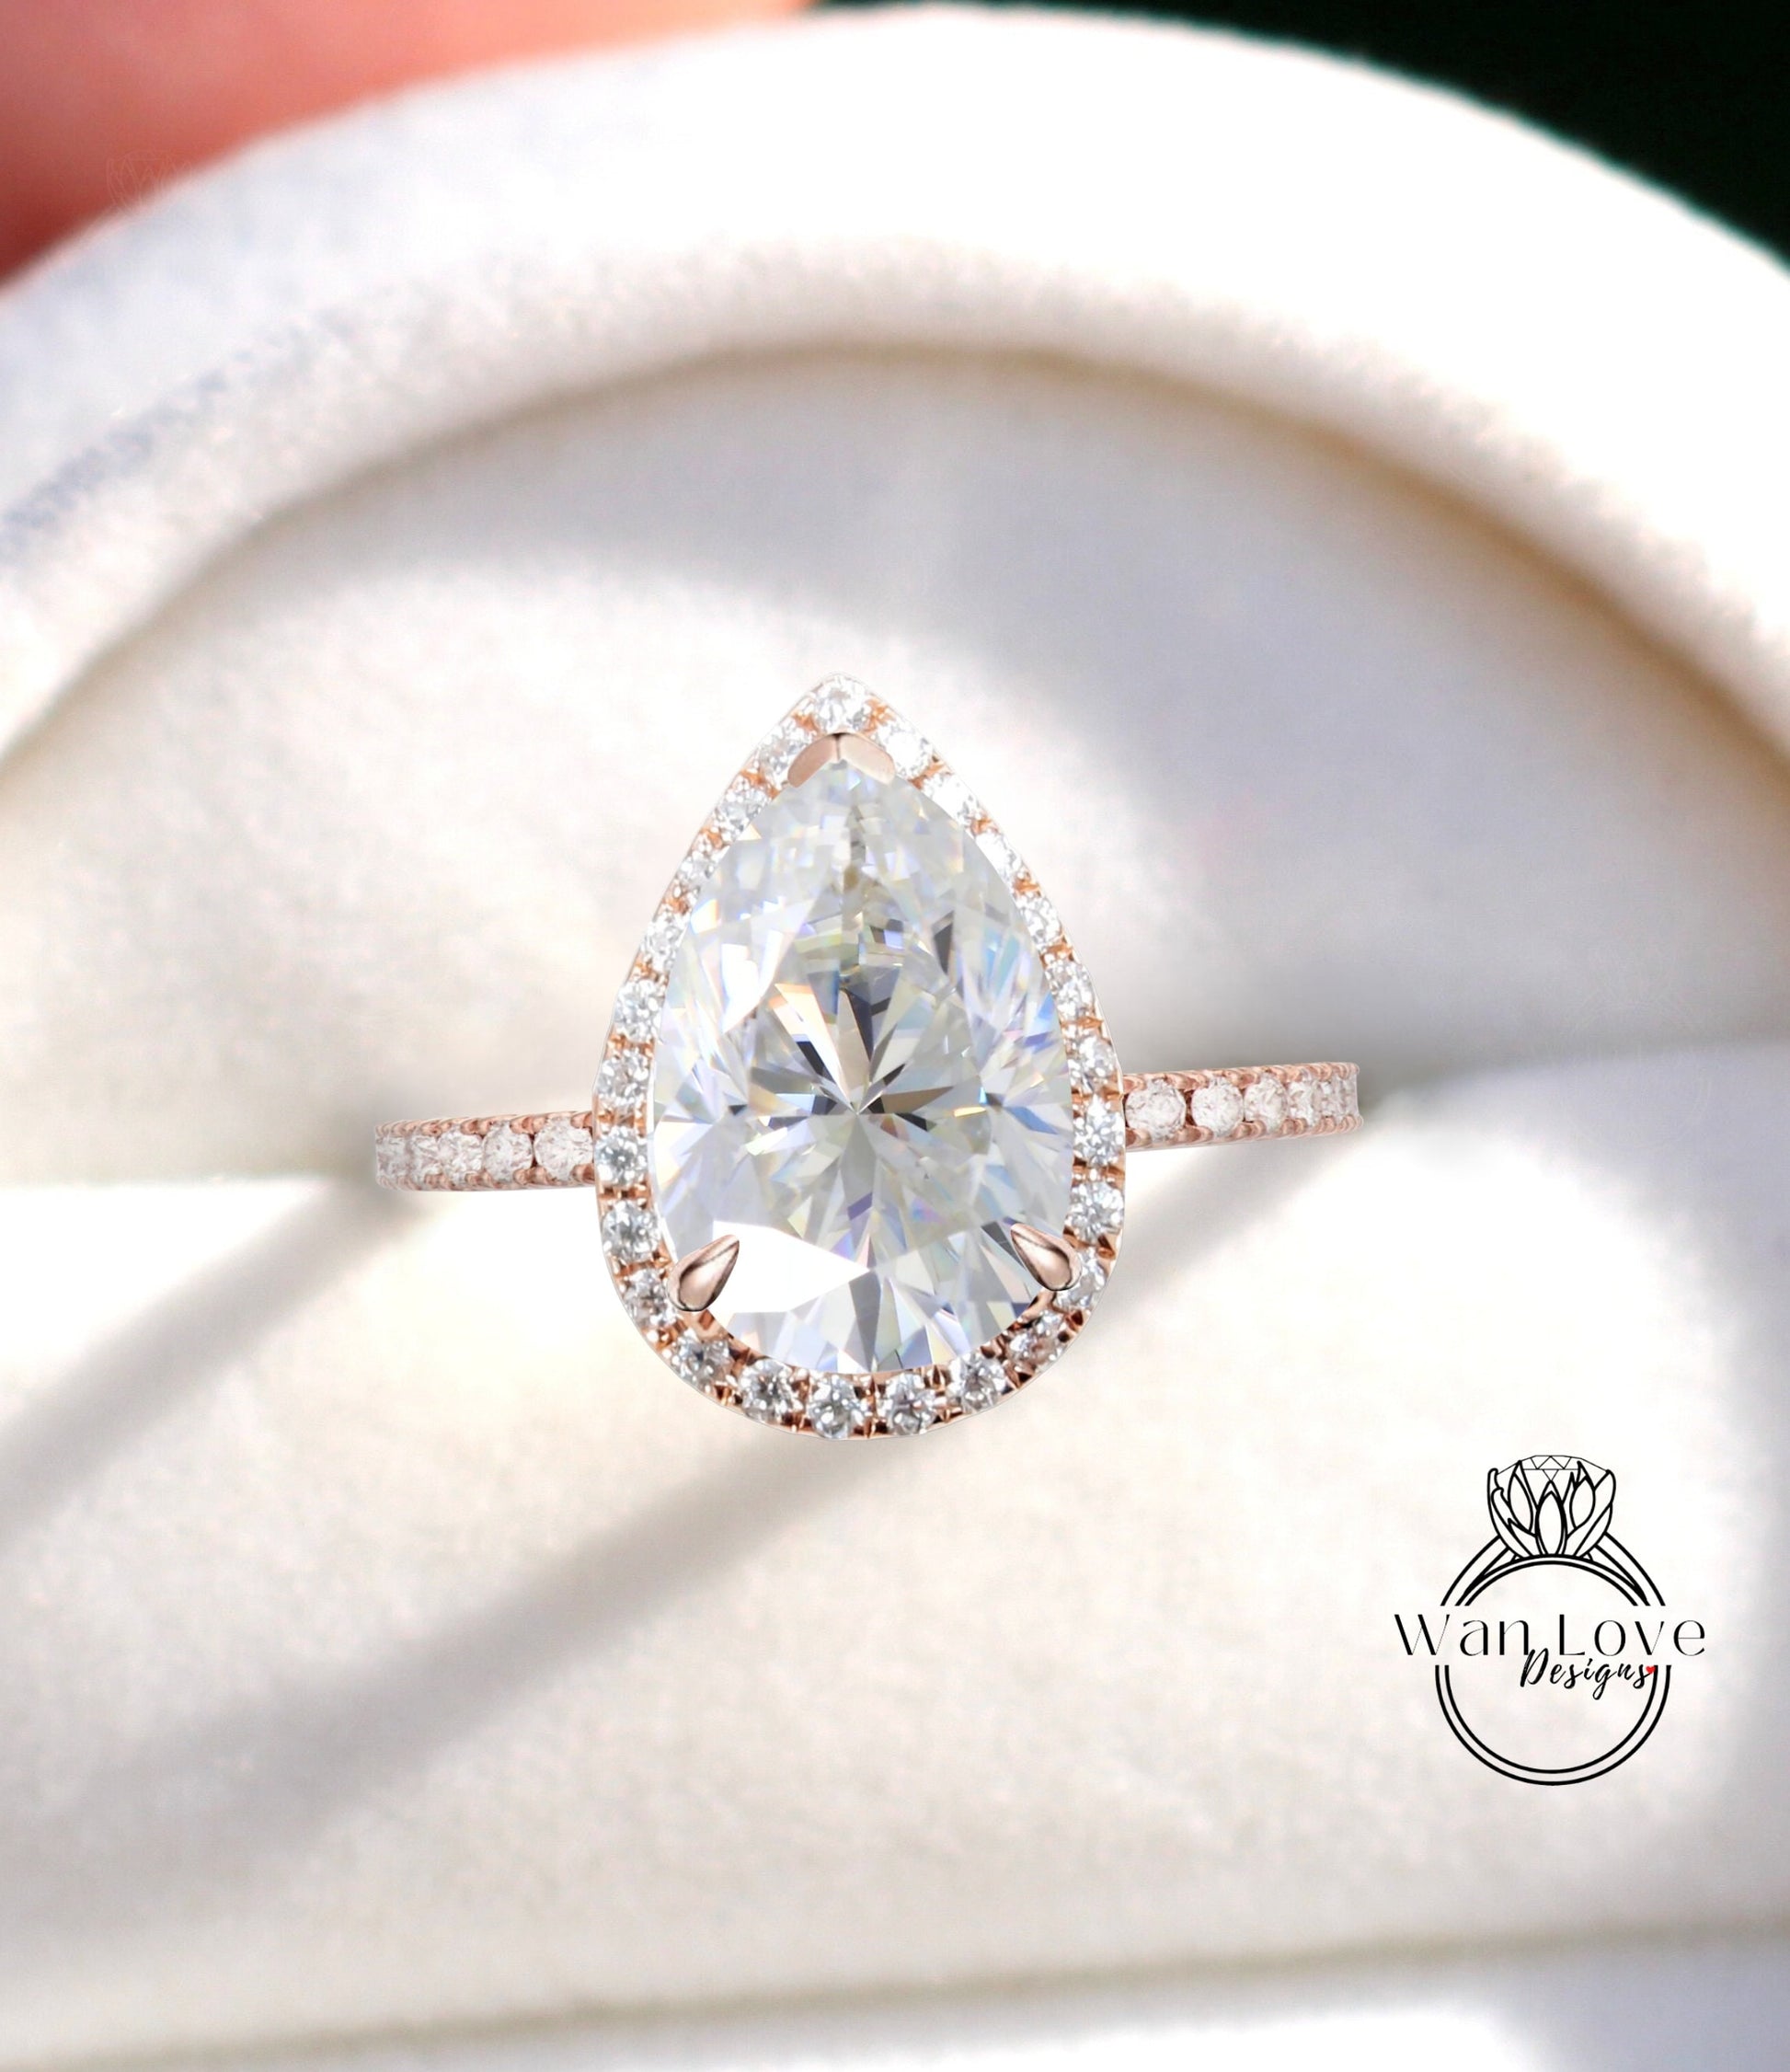 Vintage Pear shaped Moissanite Engagement Ring, Pear Cut 14k White Gold Diamond Halo Ring, Wedding Ring Anniversary Ring Proposal Ring.